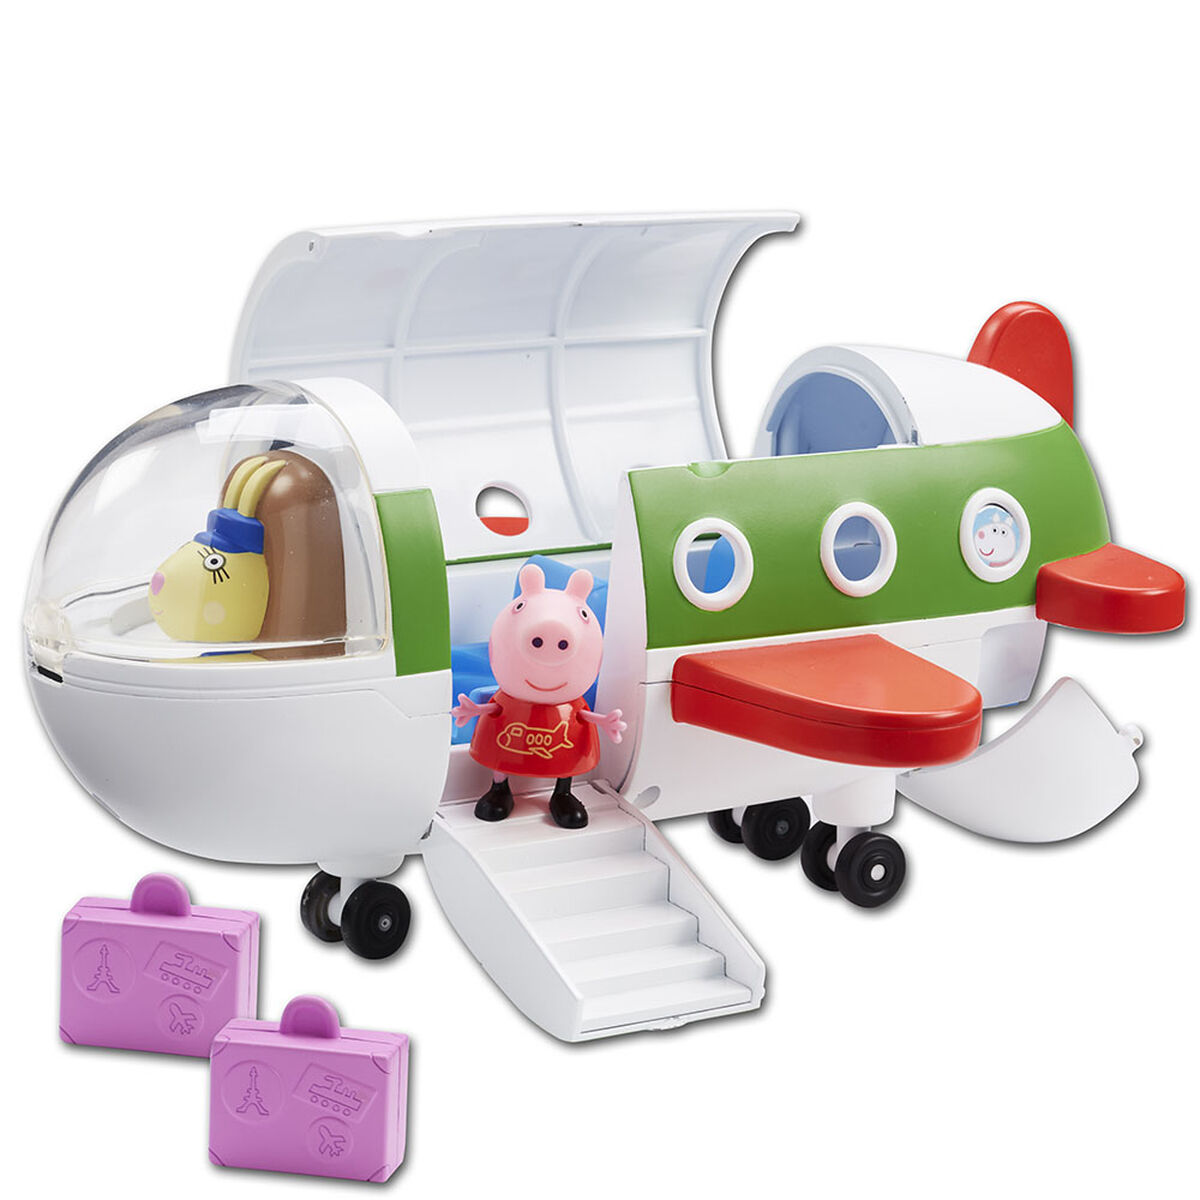 Peppa Pig Jet